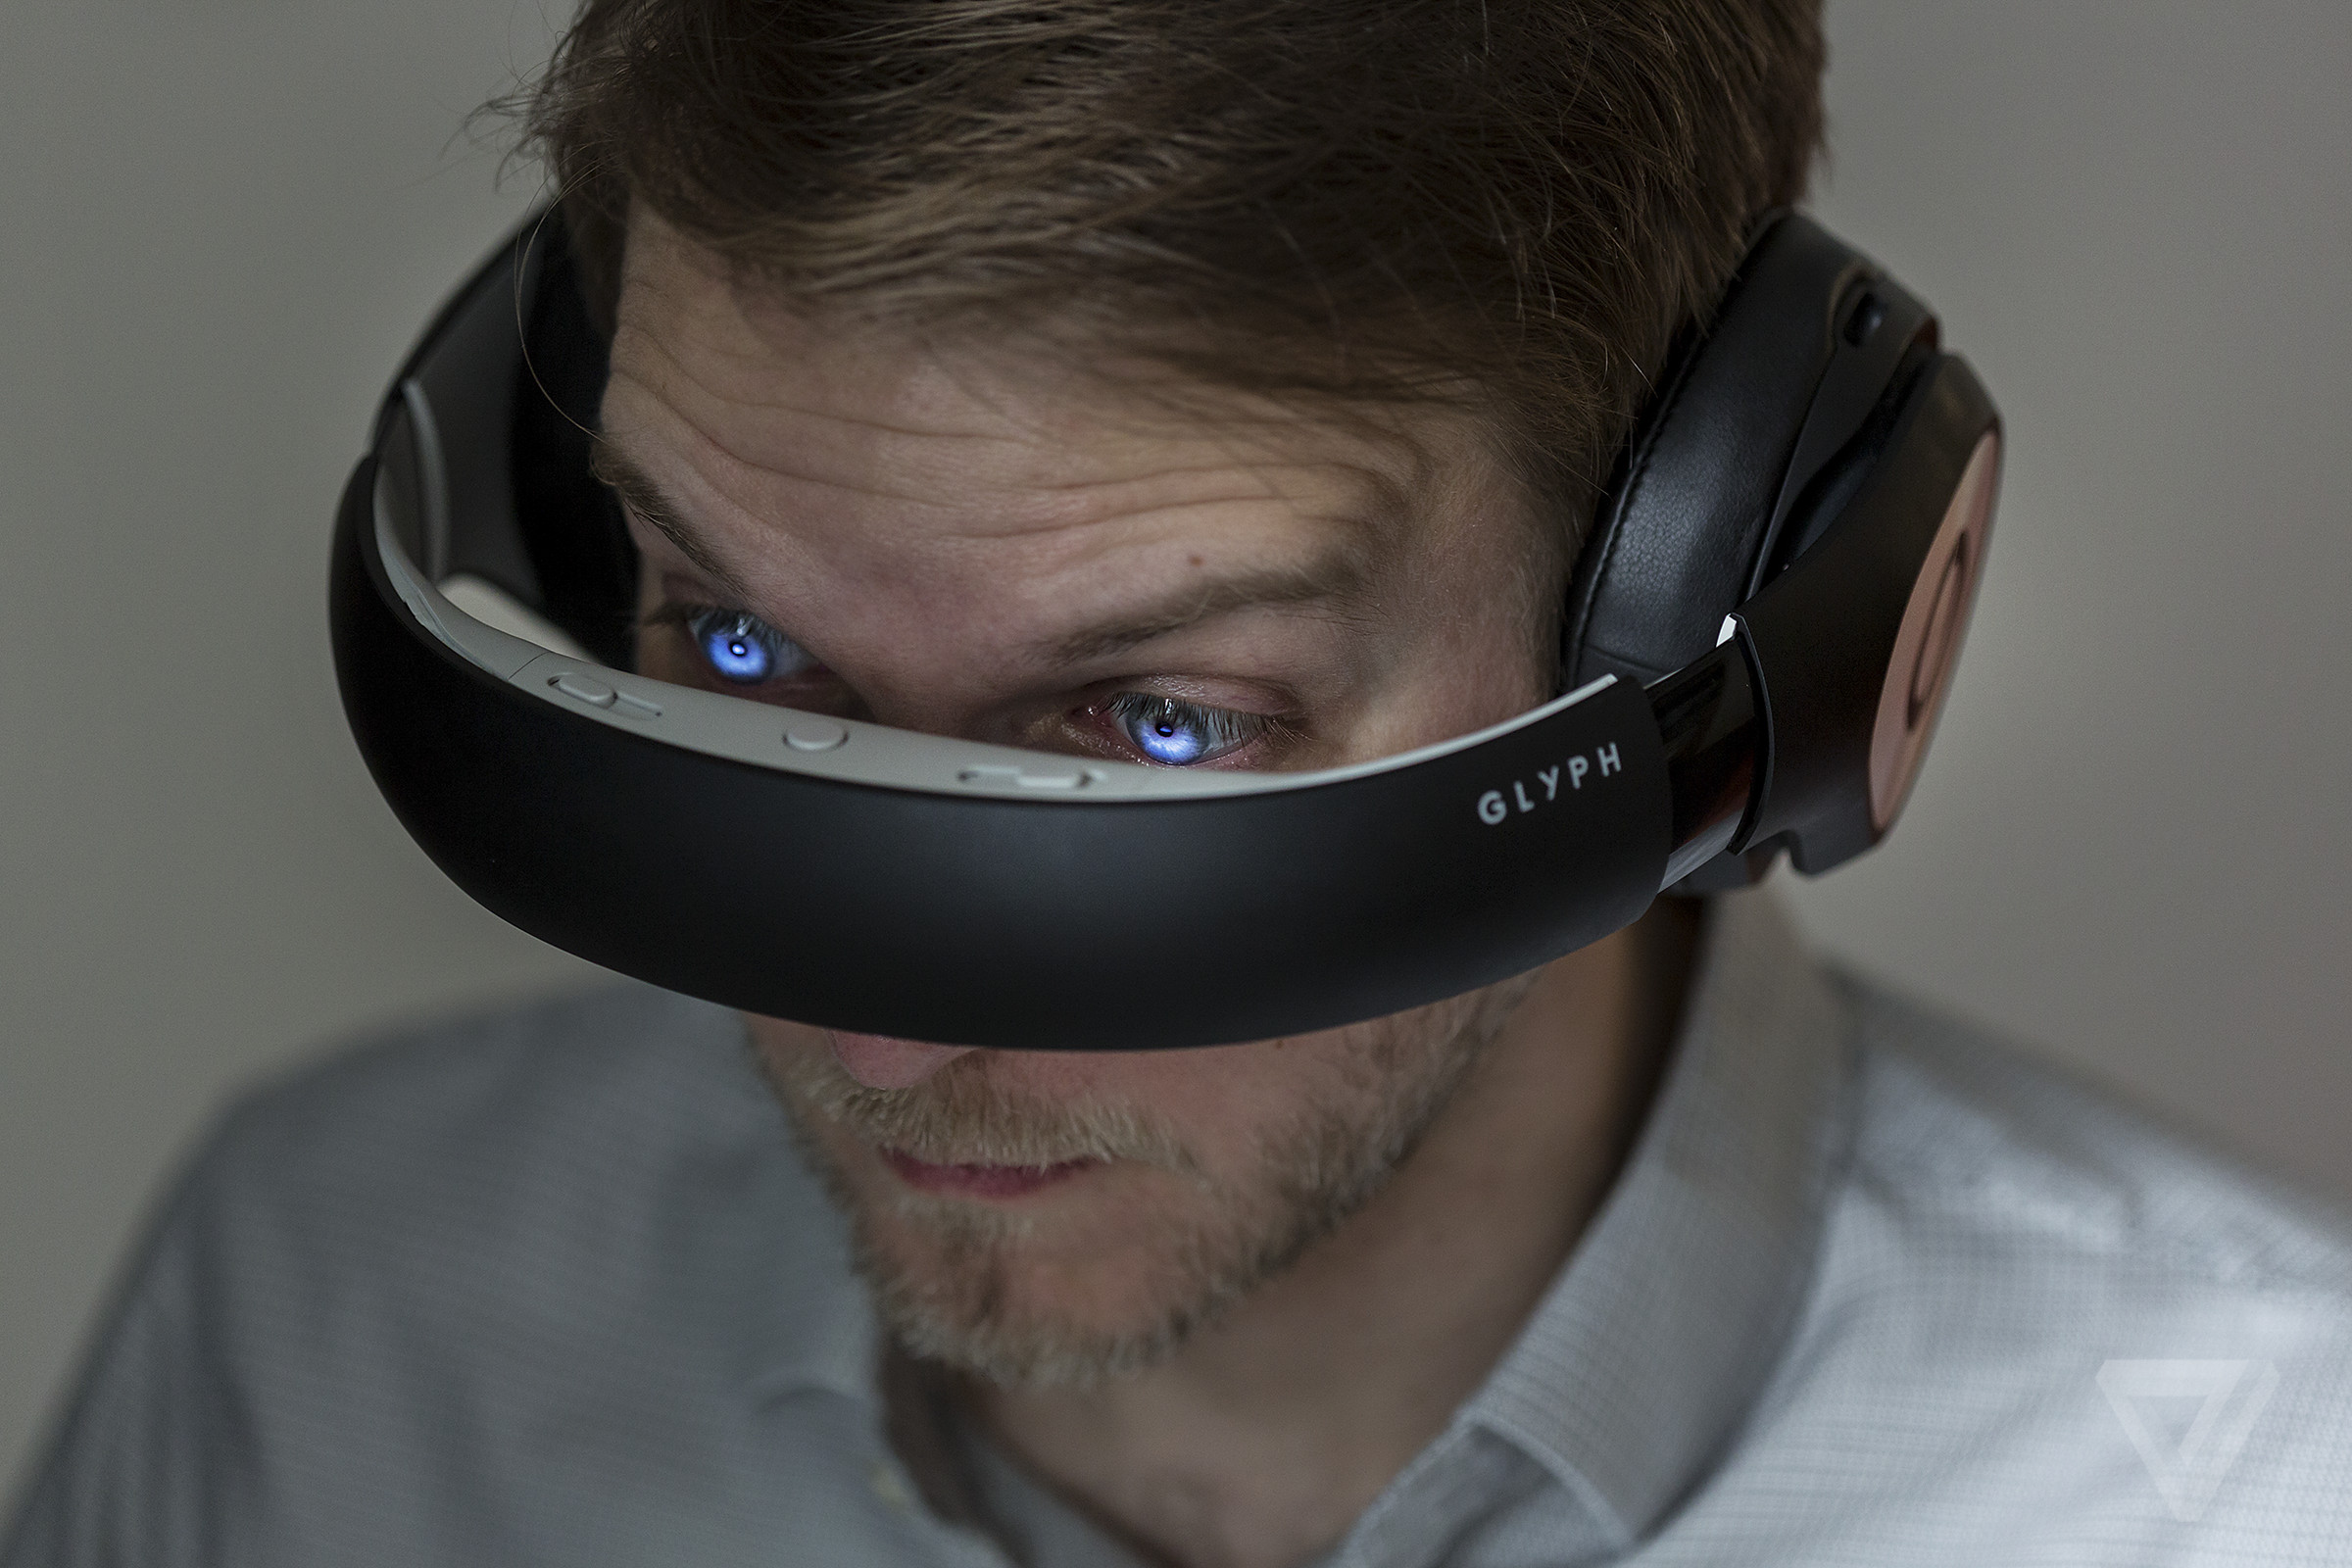 The Avegant Glyph shrunk digital film projection technology into a weird headphone-VR headset hybrid device. 